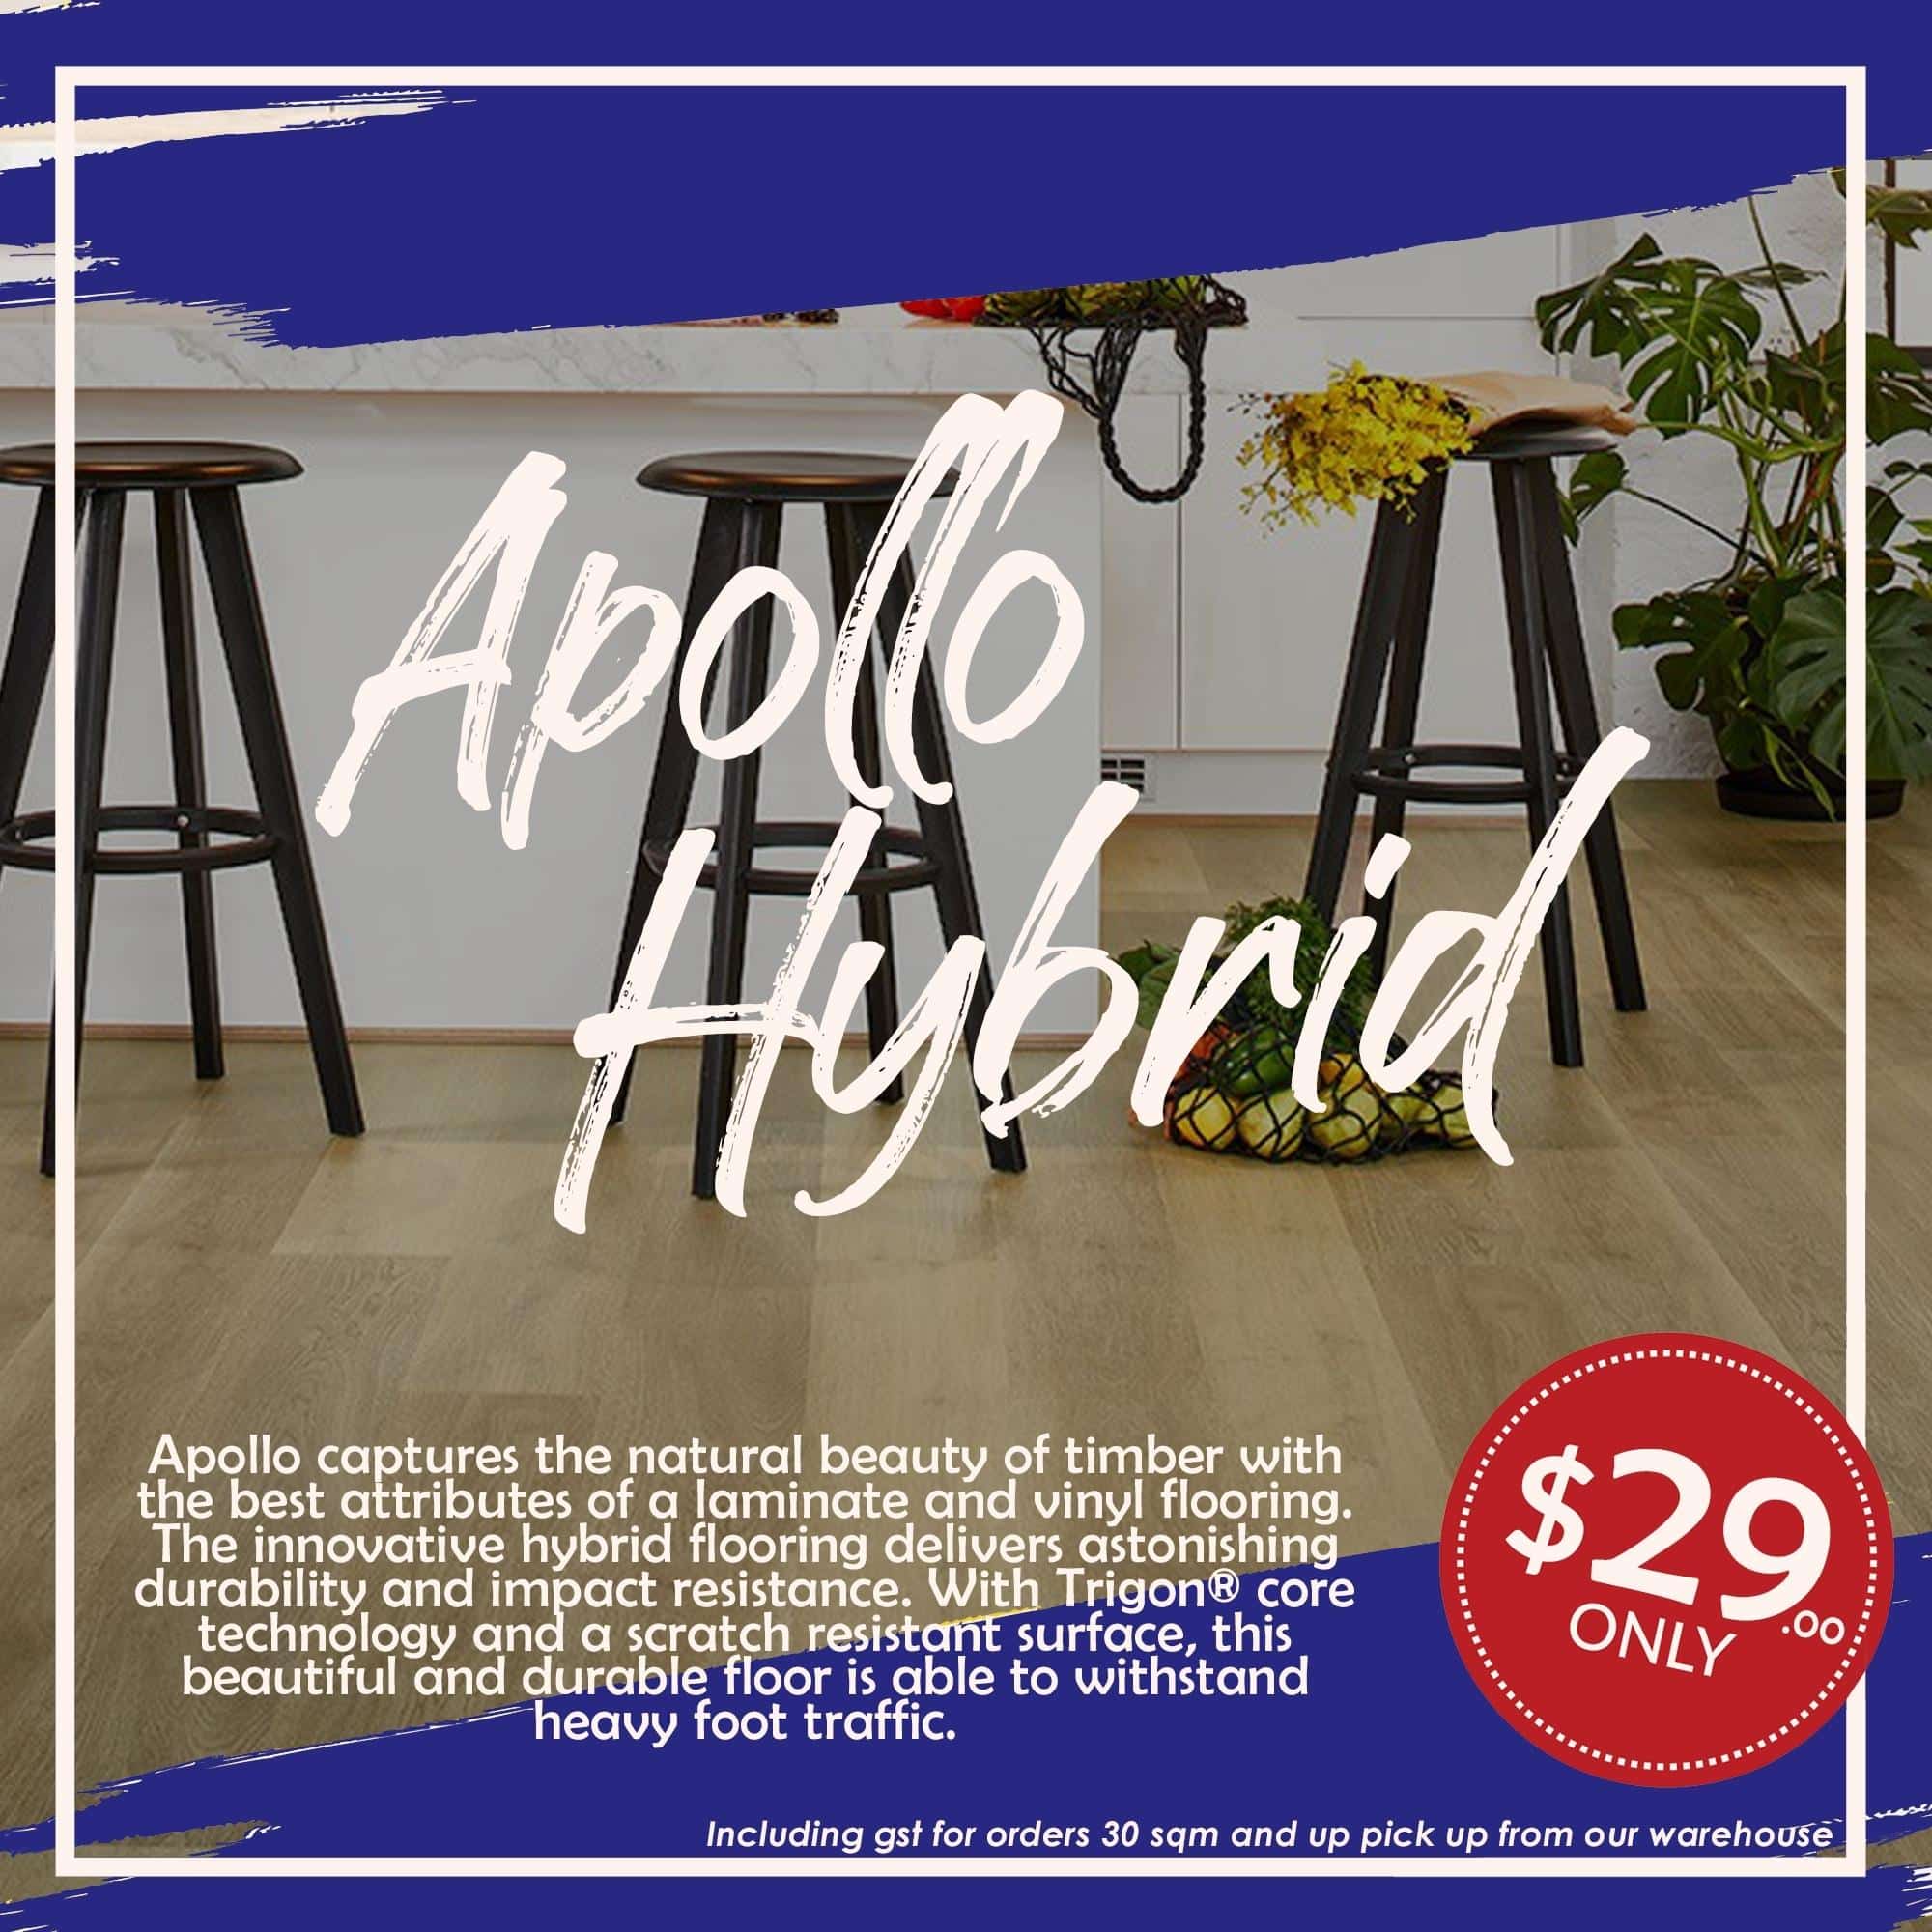 Image presents Laminate Flooring and Apollo Hybrid